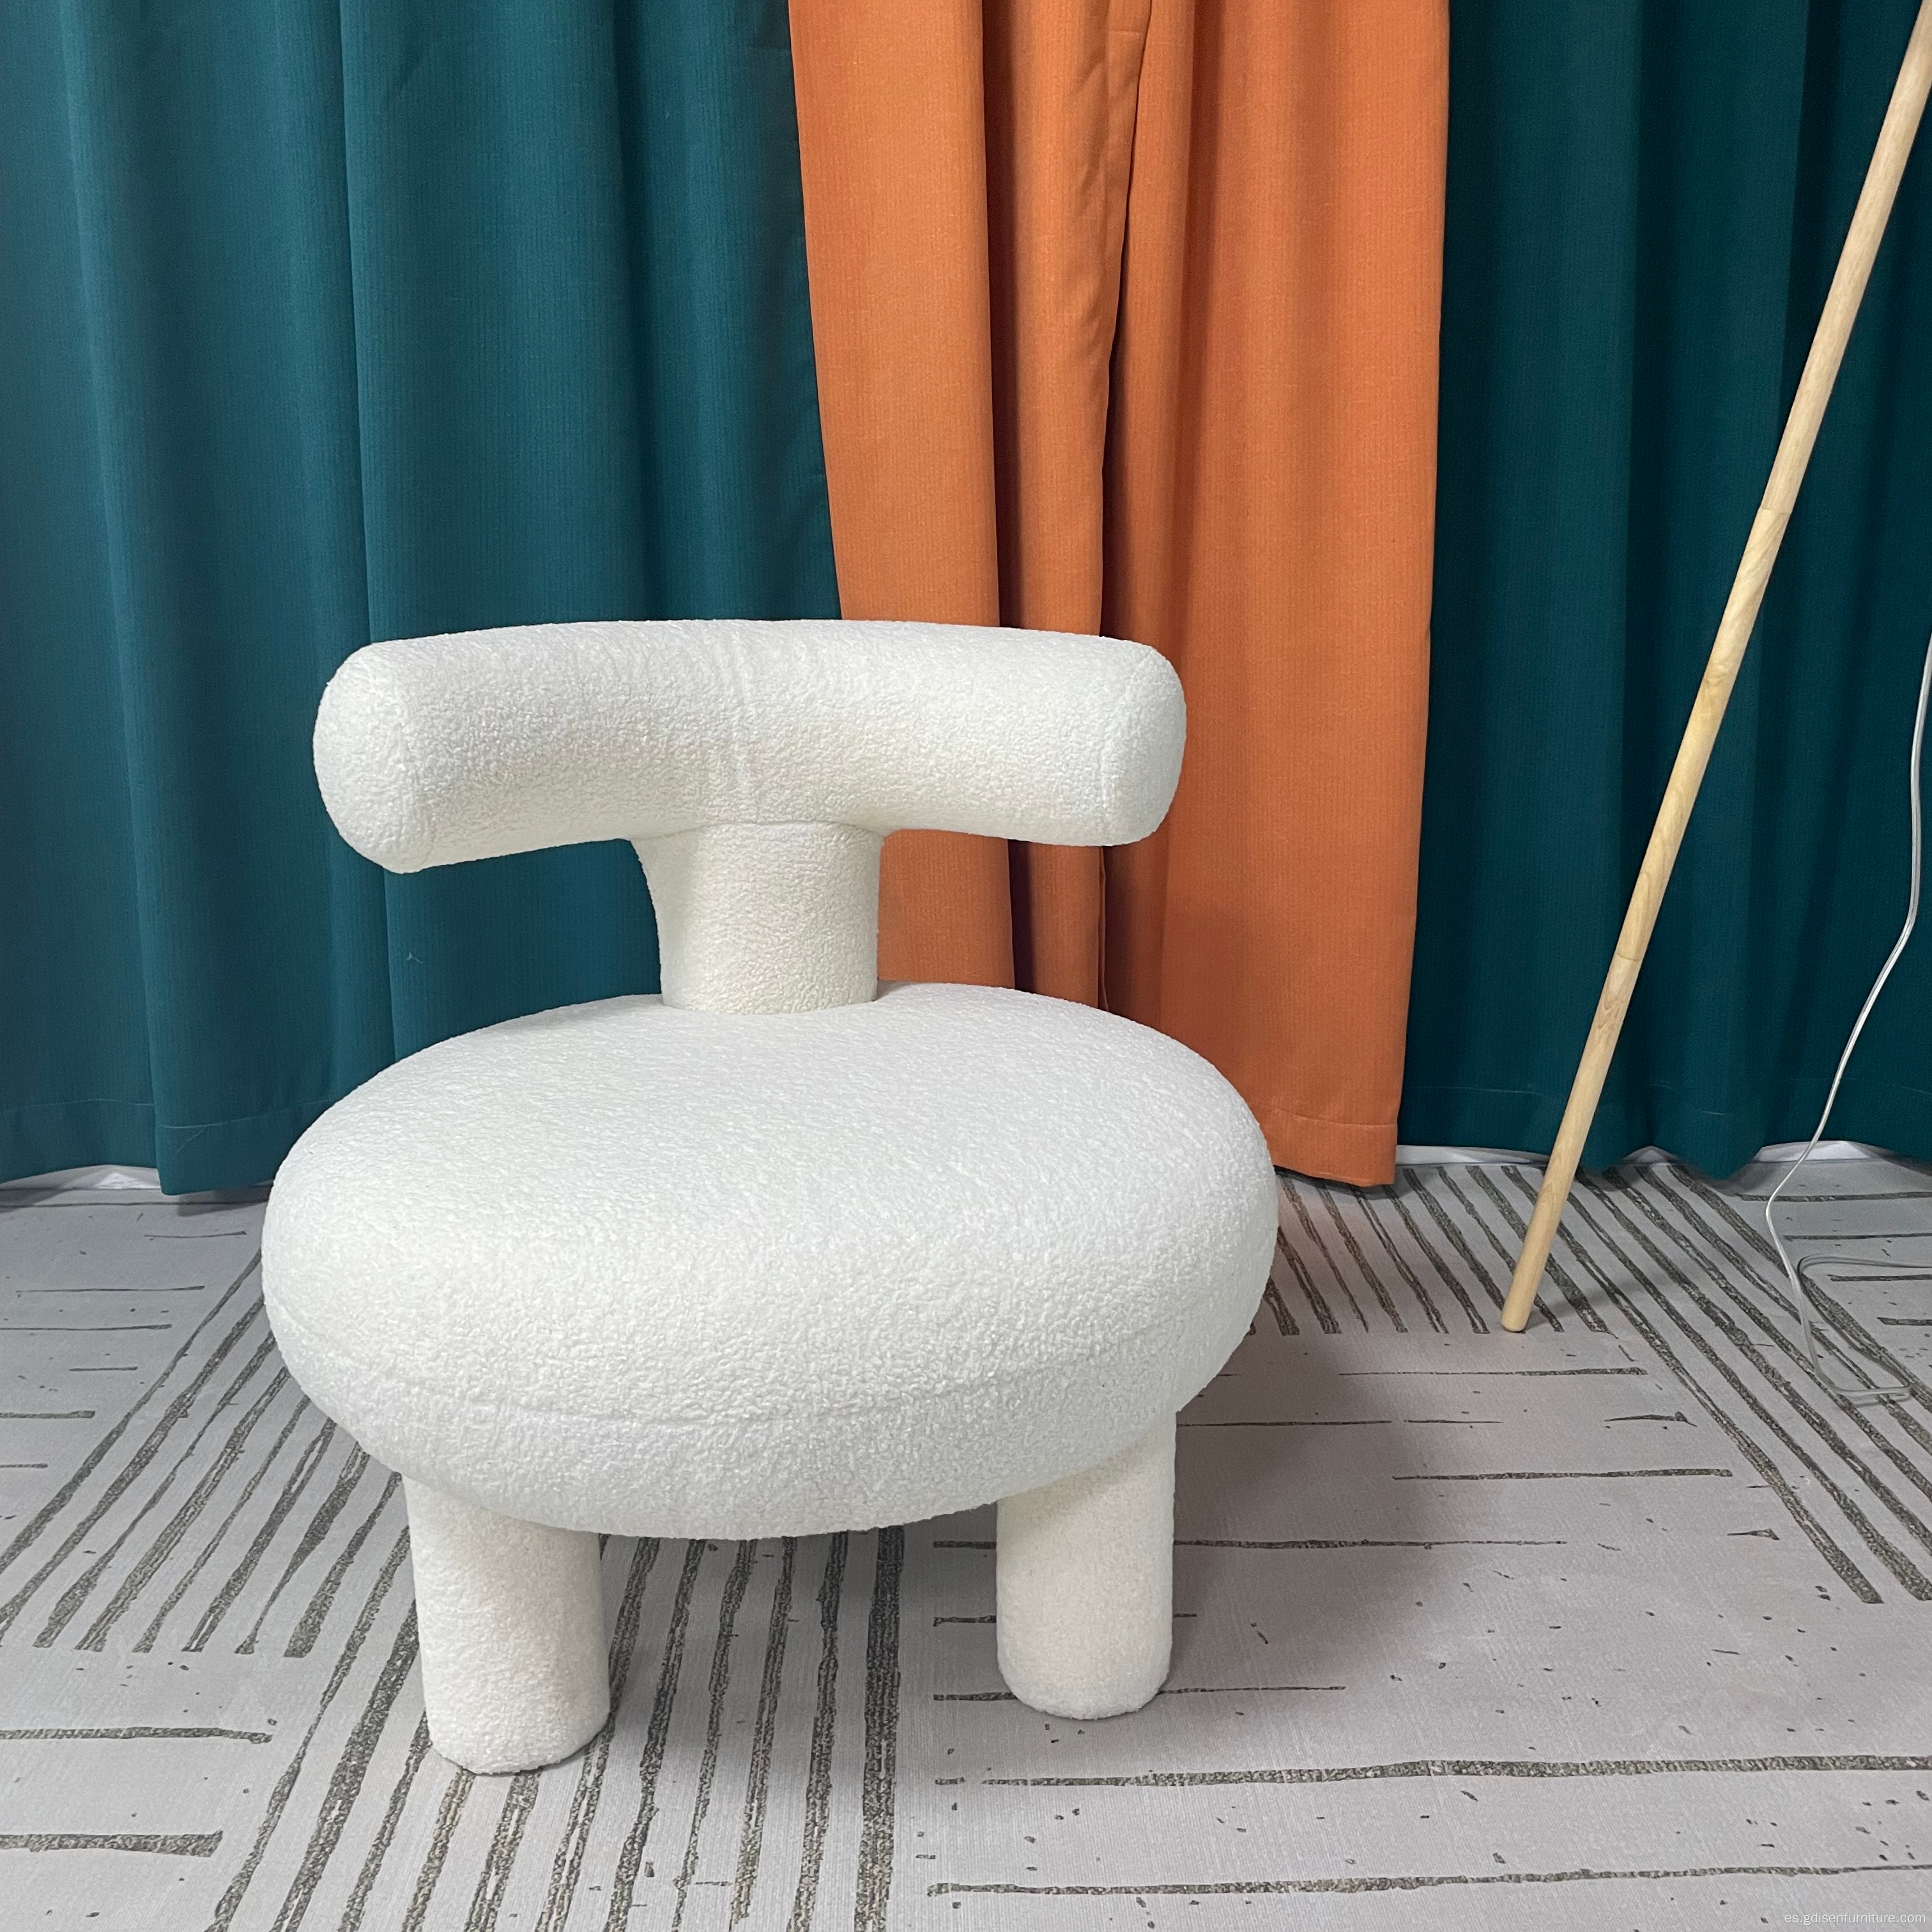 Moderno nuevo diseño nórdico moda de sala de estar popular